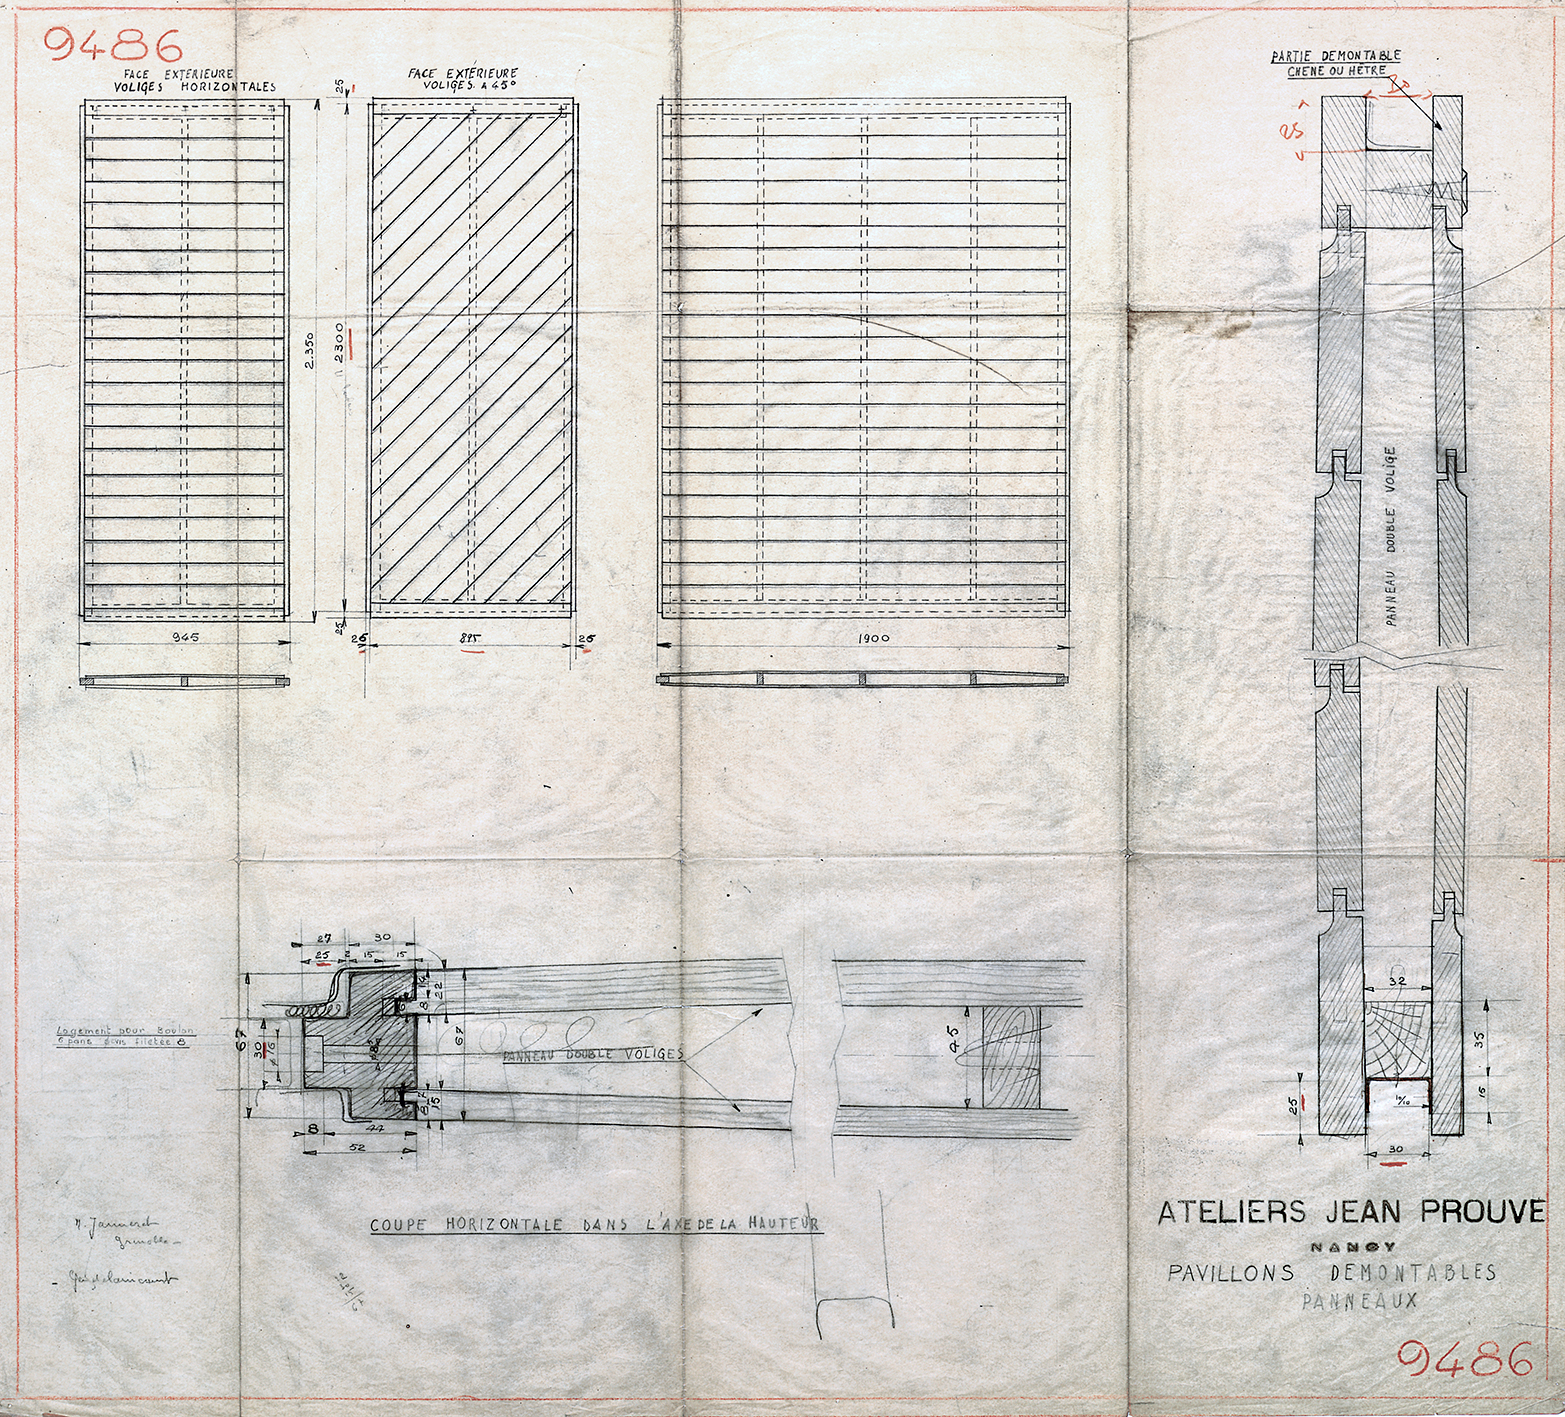 Ateliers Jean Prouvé. “Demountable pavilions, panels”, drawing no. 9486, 10 October 1944.